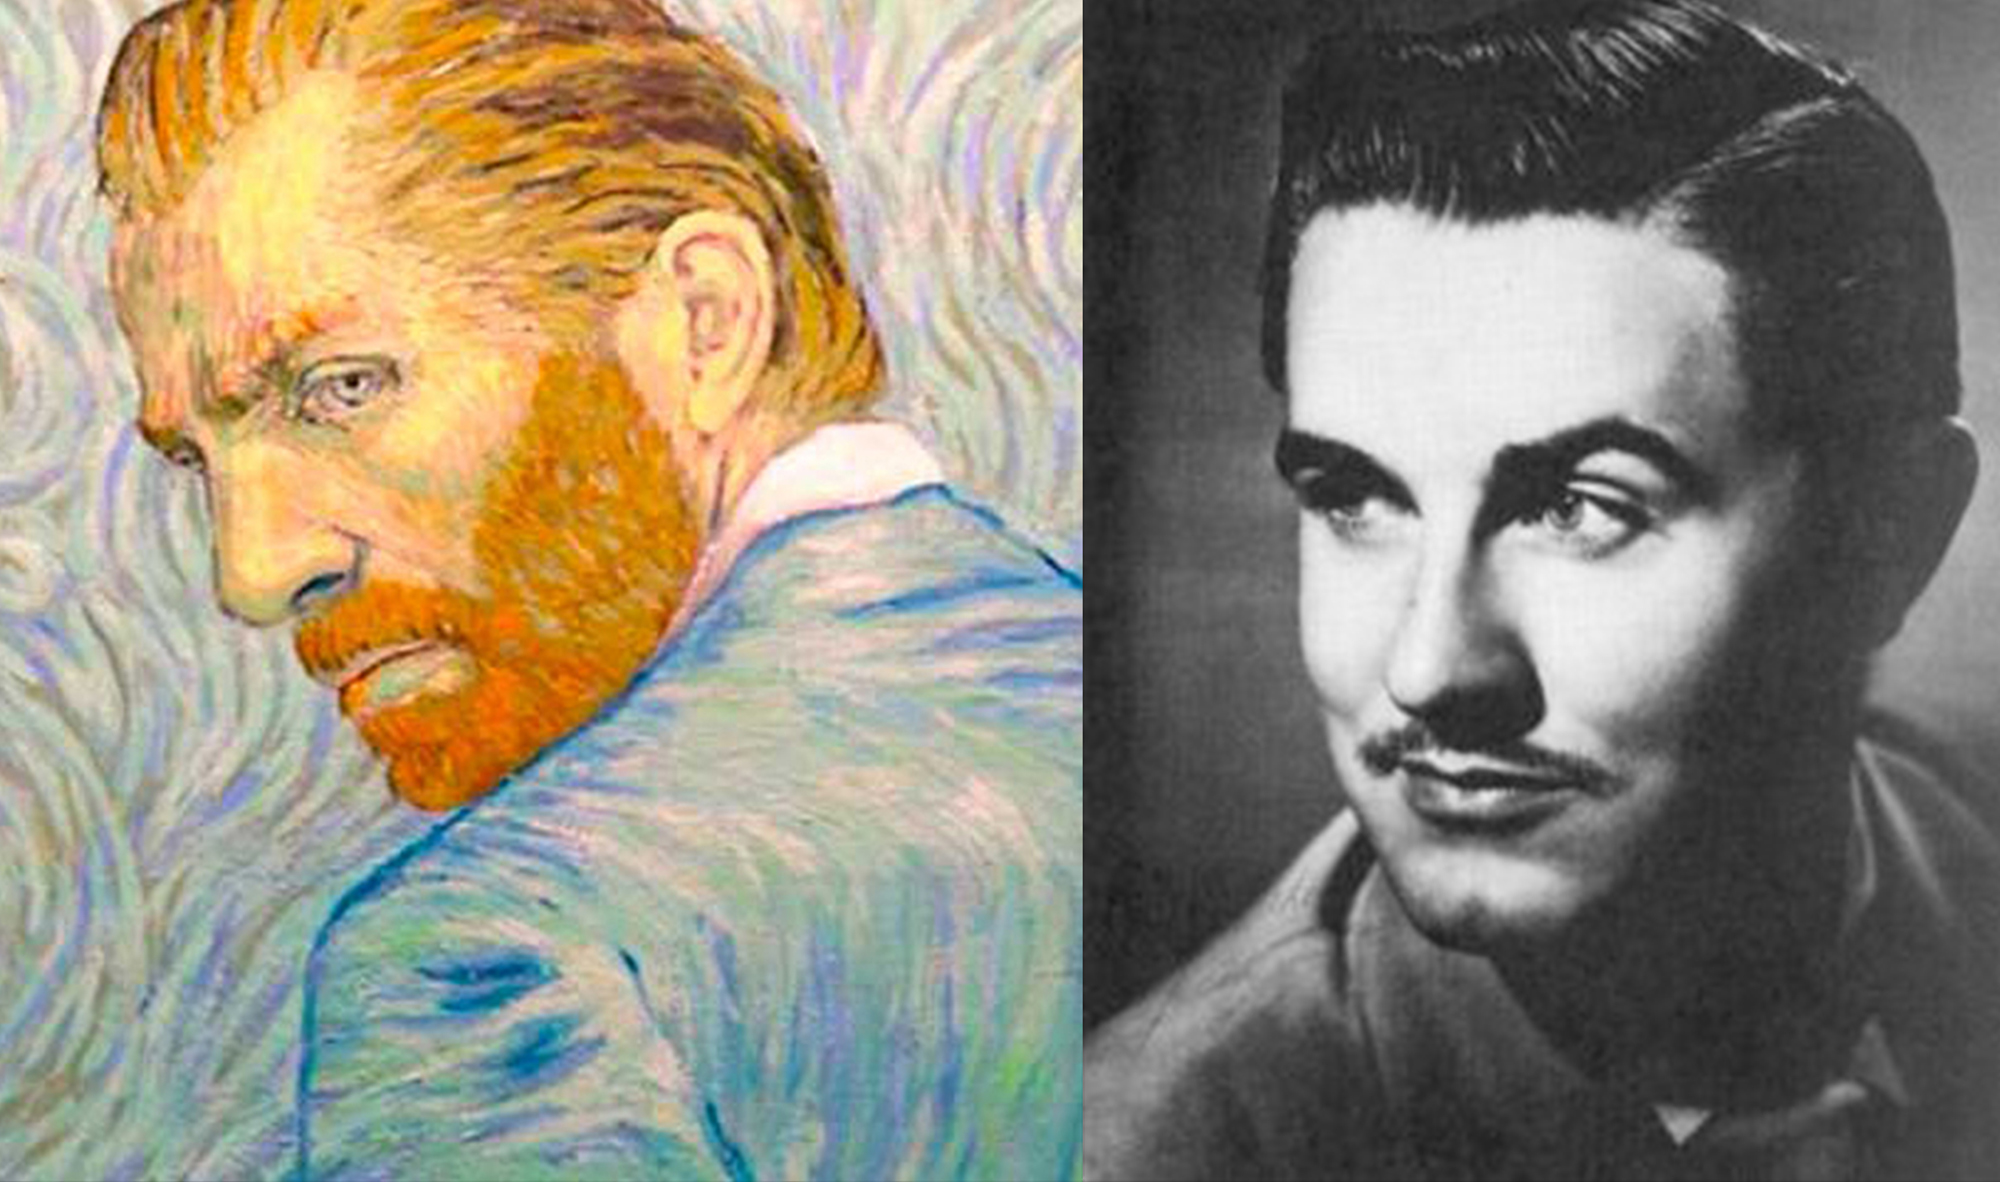 Vincent van Gogh and Ed Wood